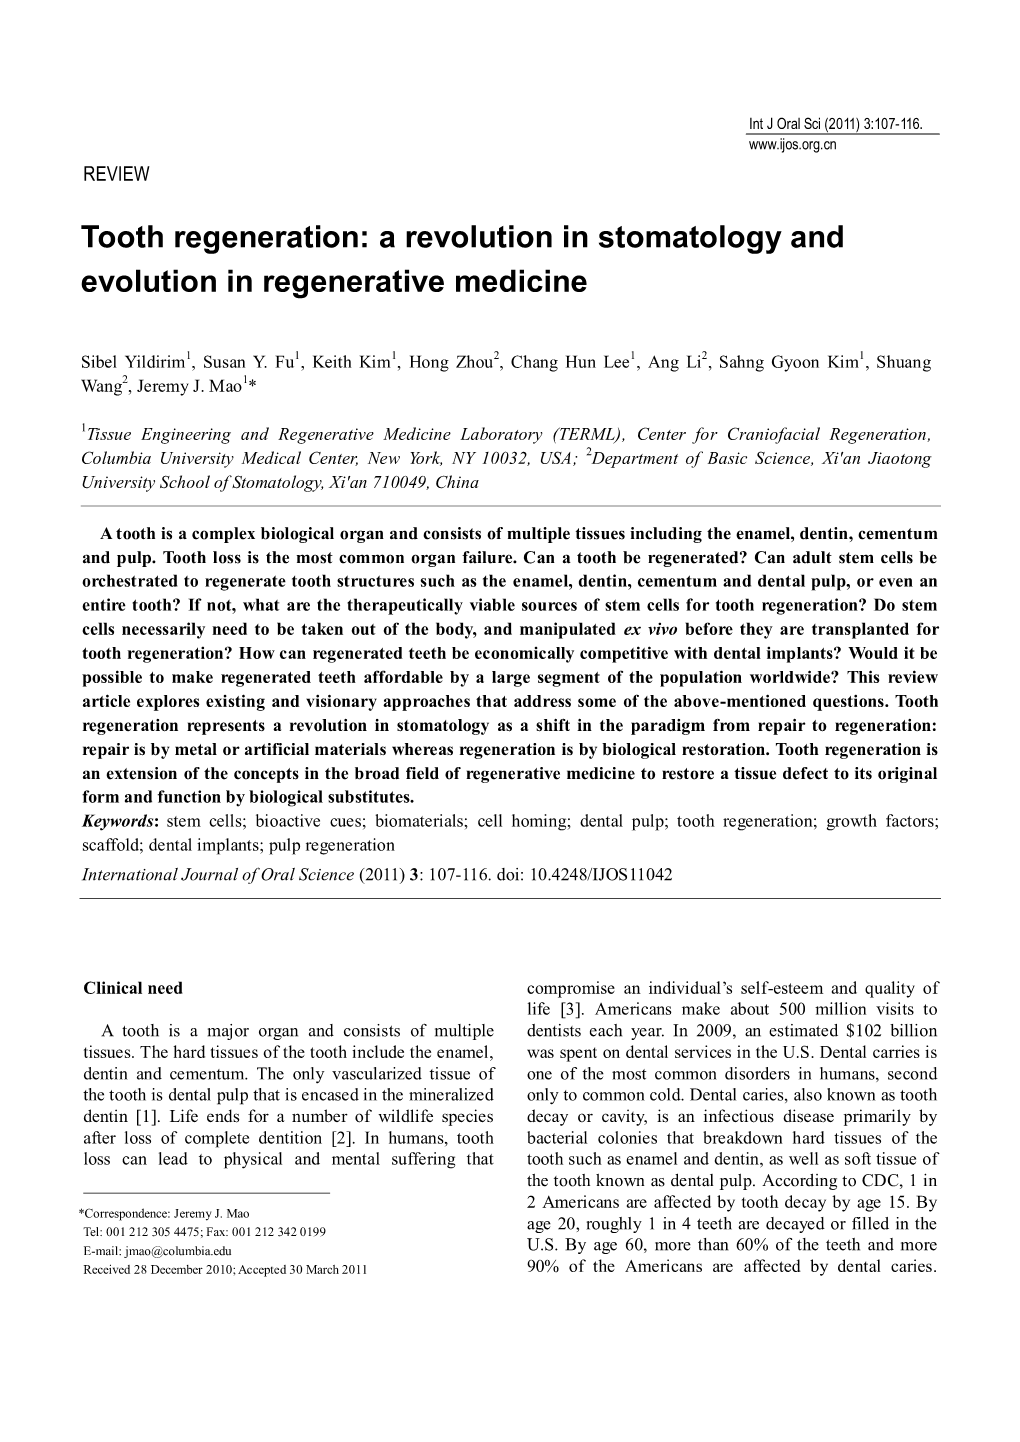 Tooth Regeneration: a Revolution in Stomatology and Evolution in Regenerative Medicine